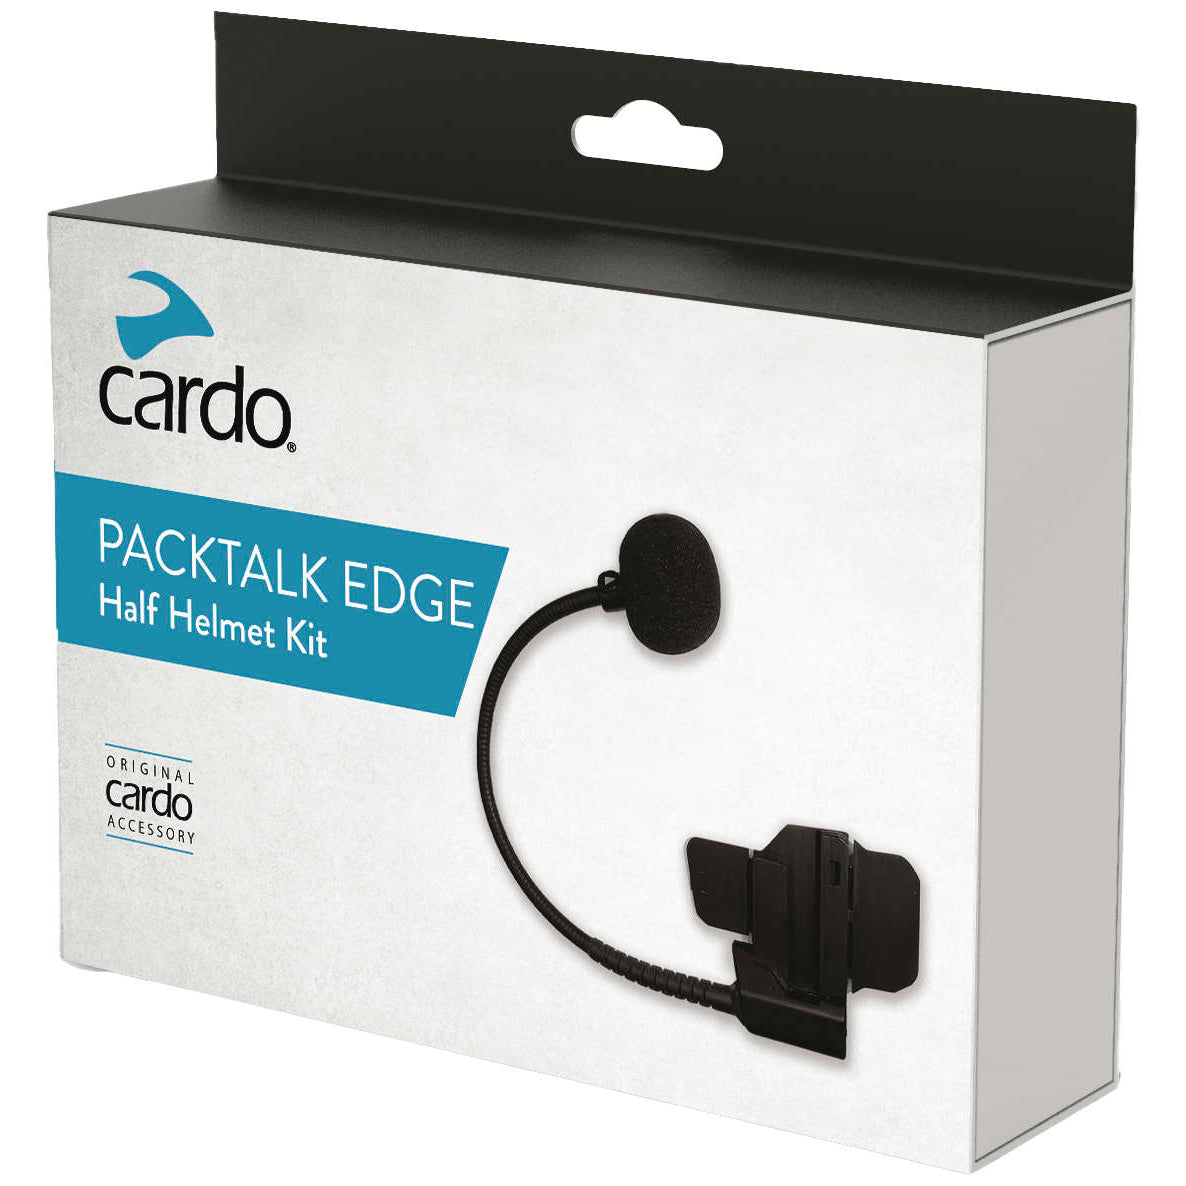 Cardo Packtalk Edge Half Helmet Kits